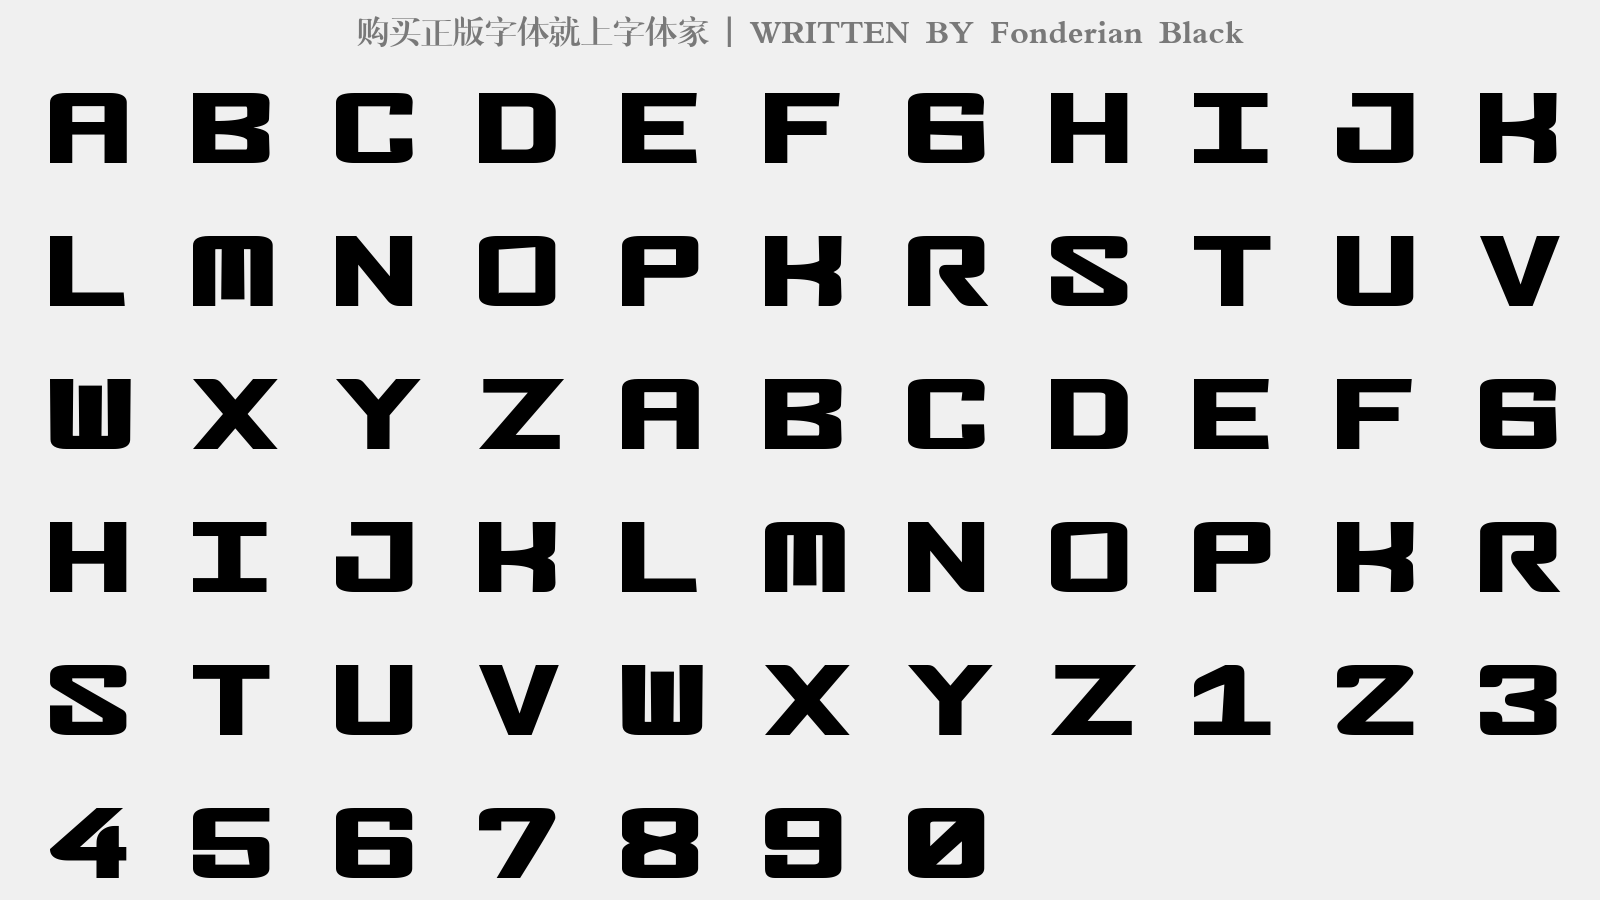 Fonderian Black - 大写字母/小写字母/数字